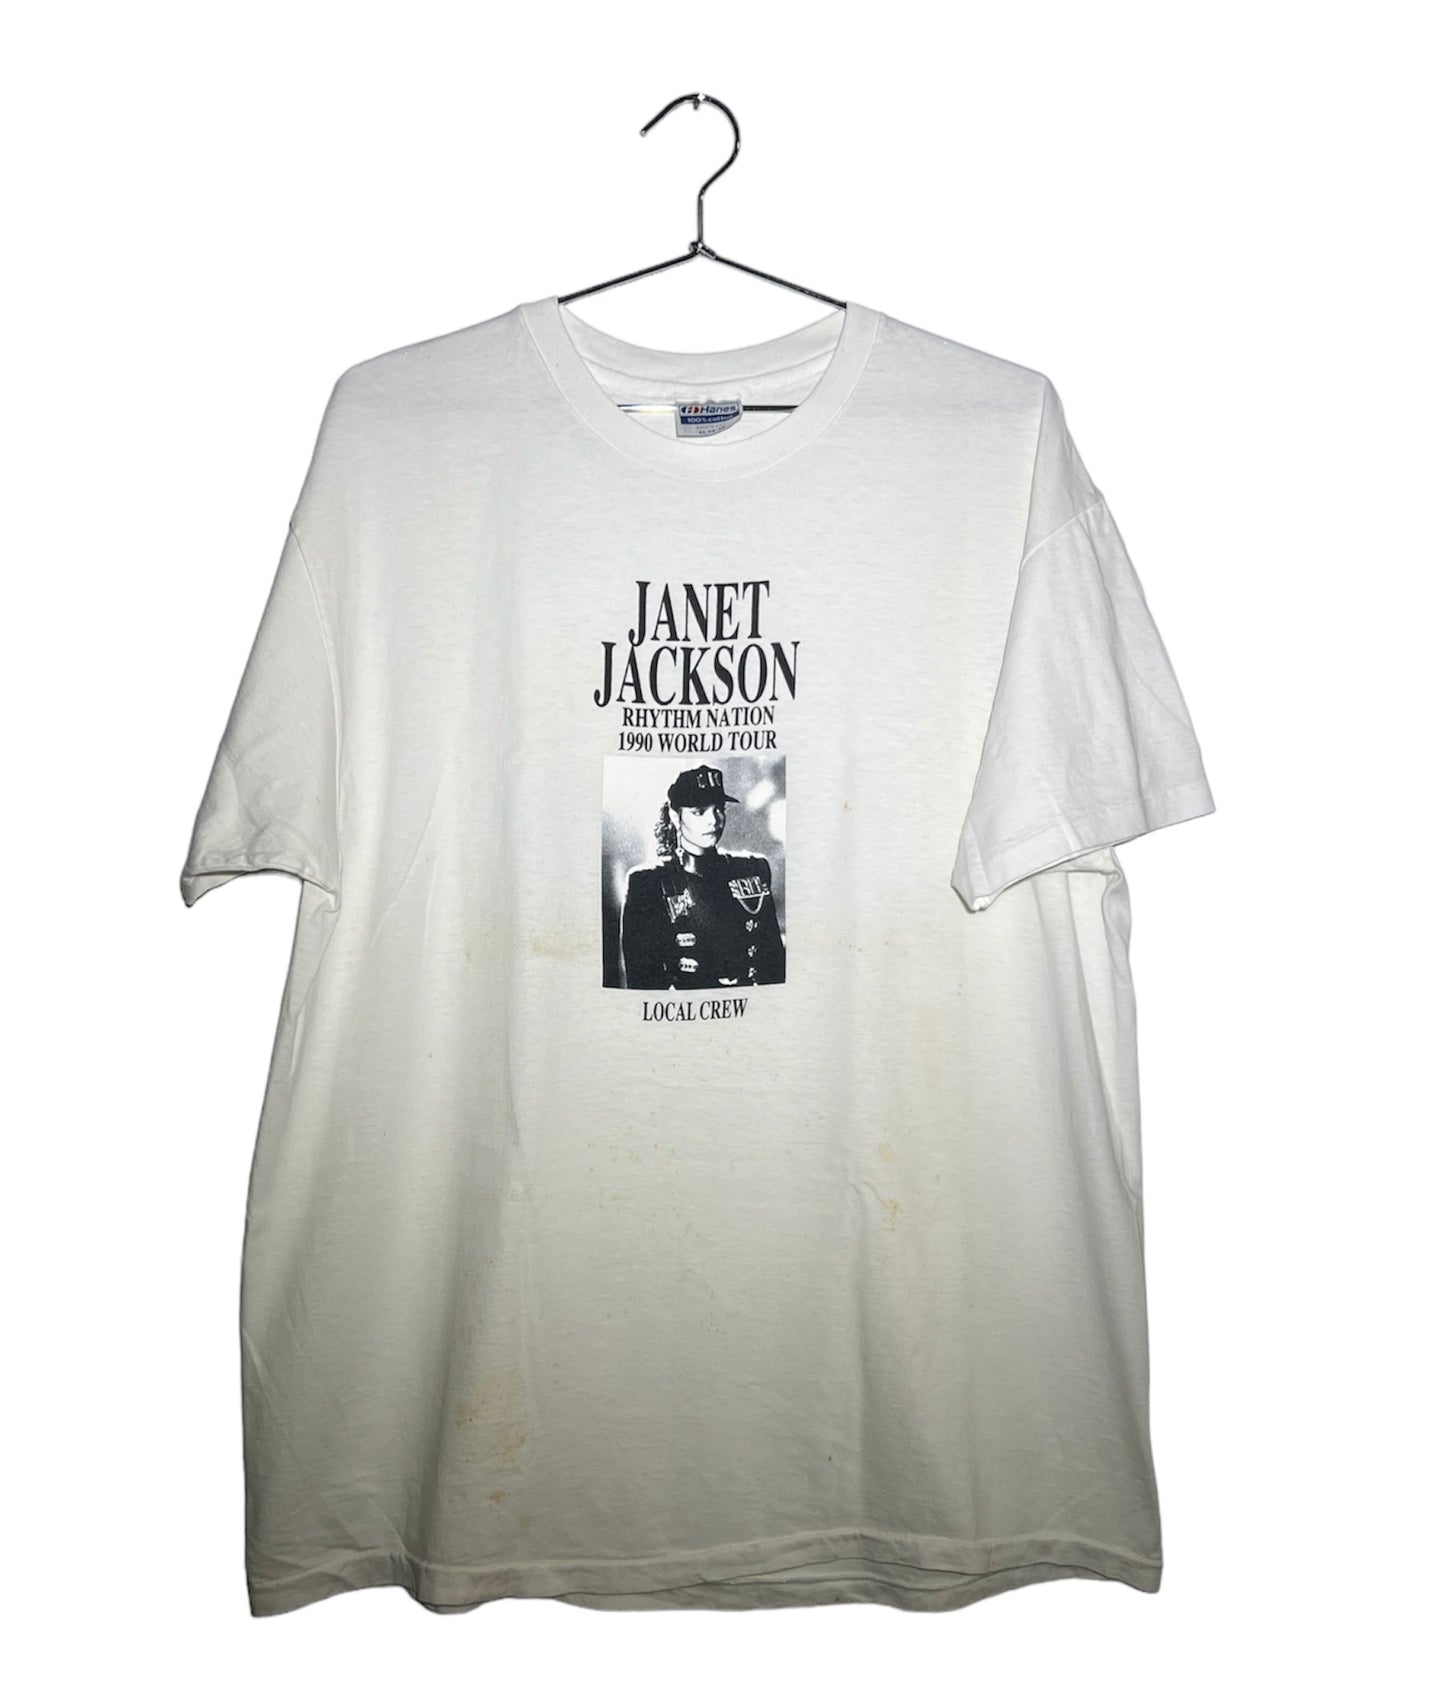 Janet Jackson 1990 World Tour Shirt